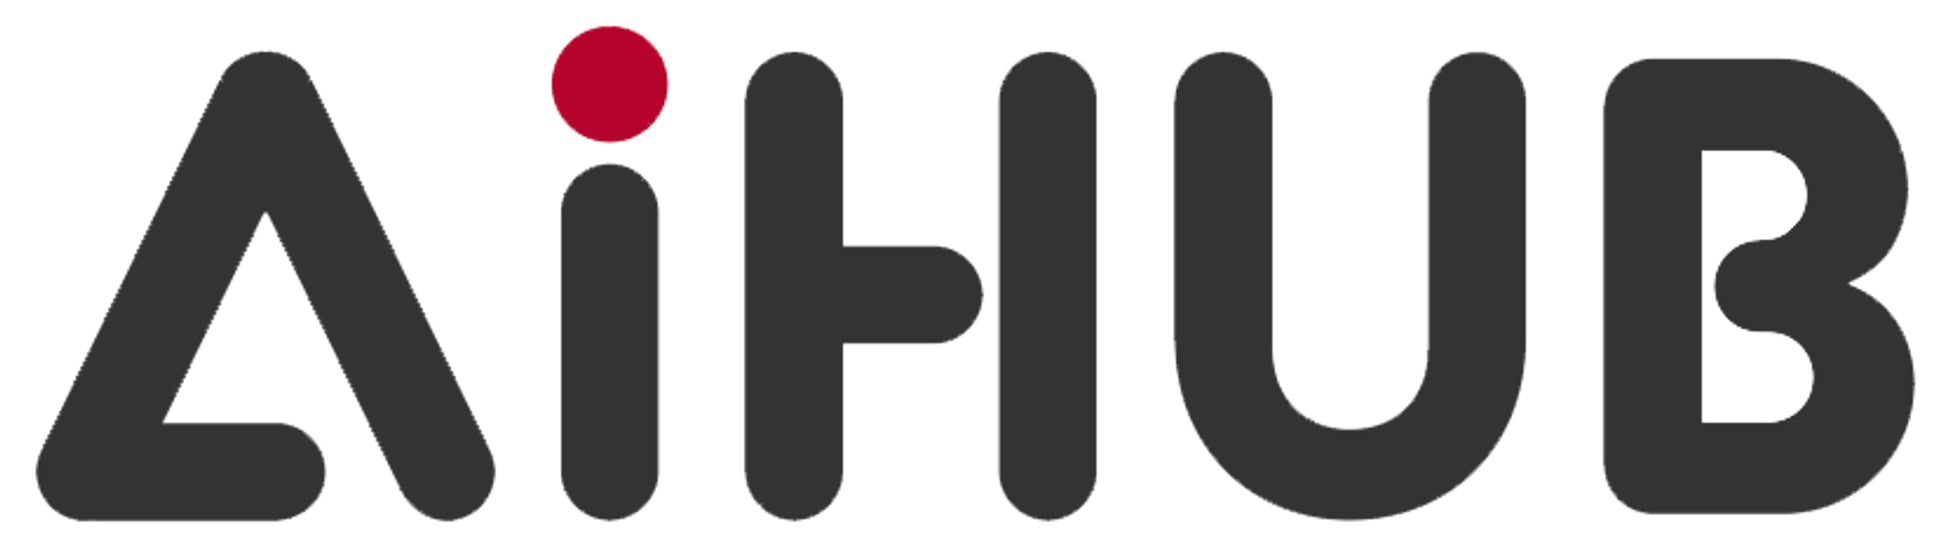 AiHUB株式会社が、マイクロソフト社のスタートアップ支援プログラム「Microsoft for Startups Founders Hub」に採択されました。